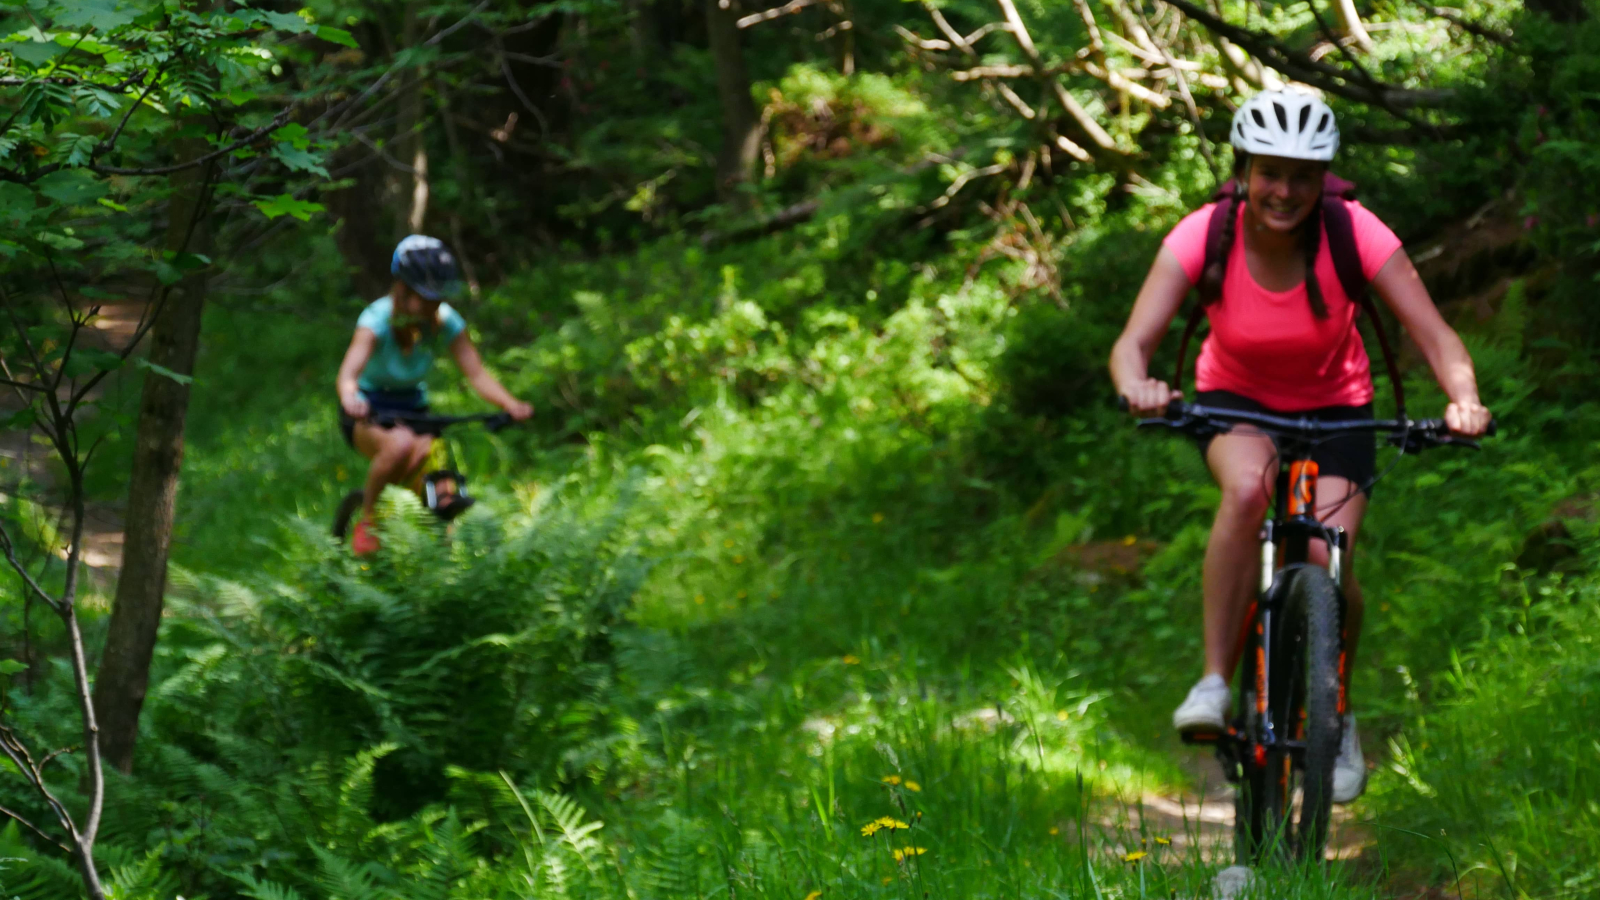 Evolution2-Chamonix-Discover Mountain Biking